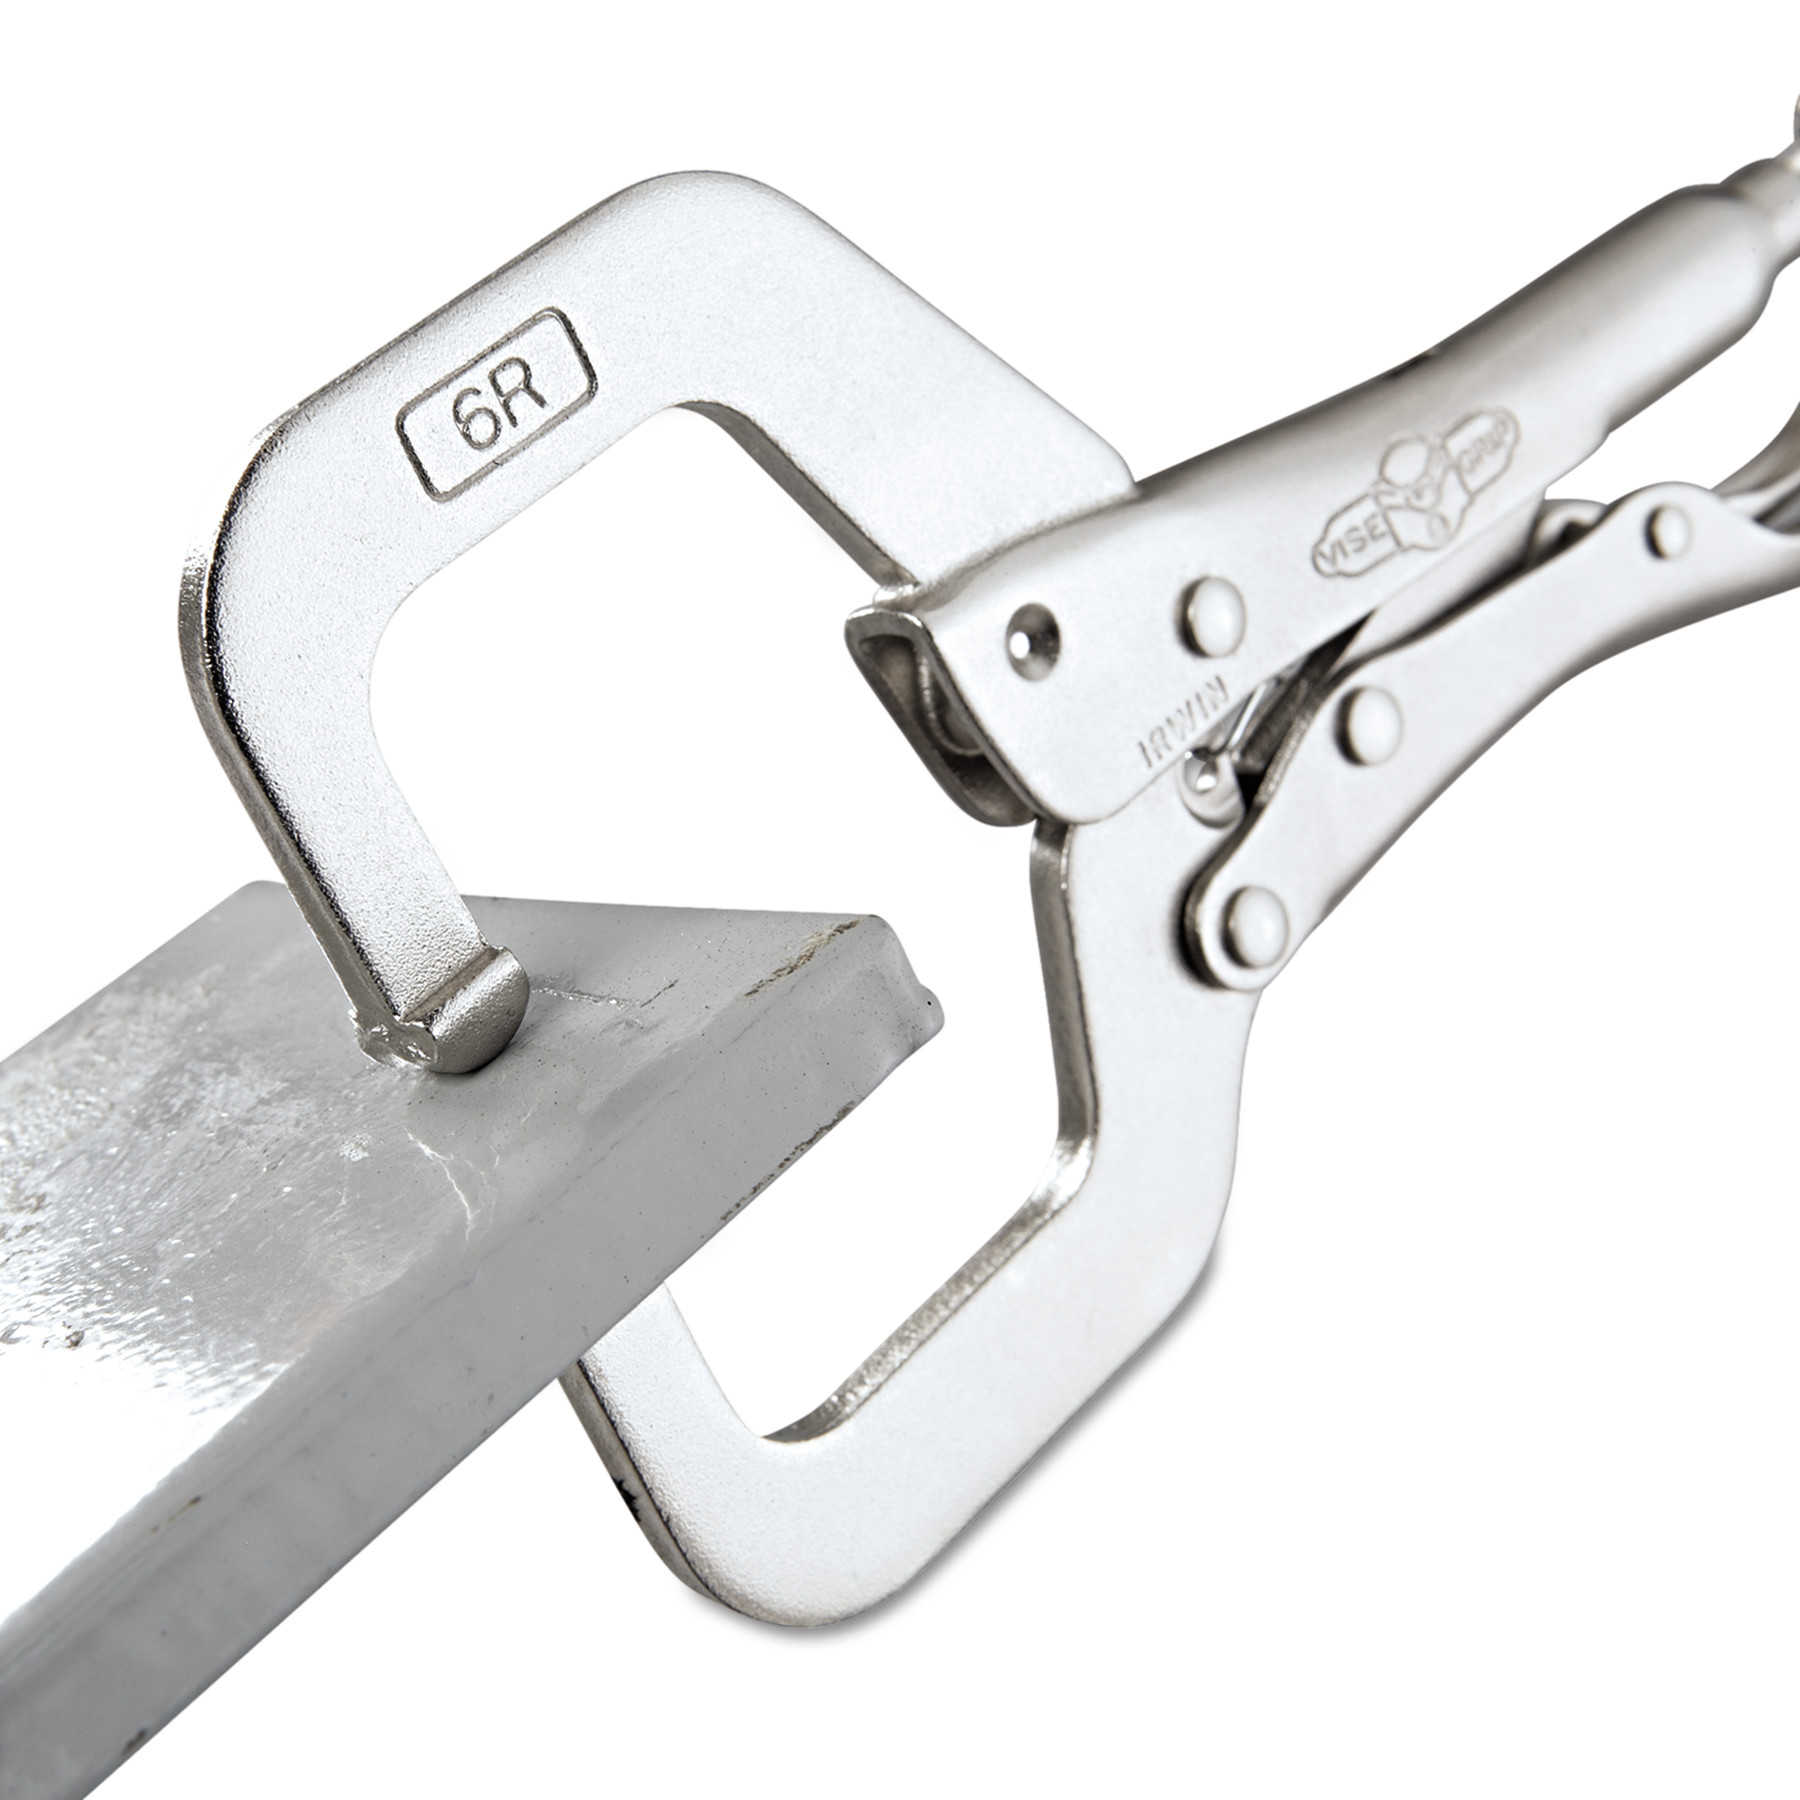 IRWIN Original Locking C-Clamp Pliers, 6' Tool Length, 2 1/8' Jaw Capacity